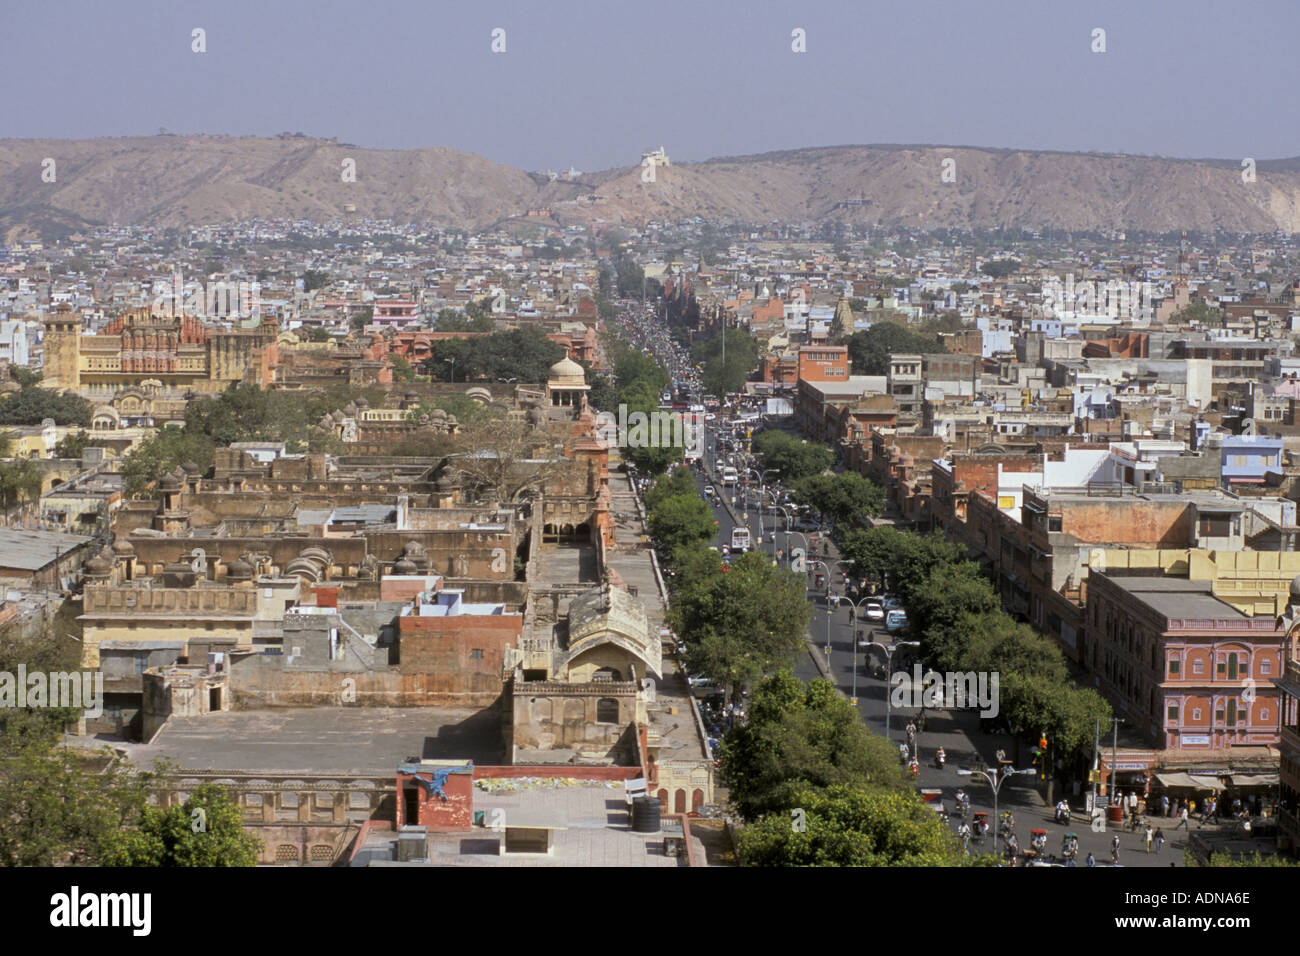 India Rajasthan Jaipur street scene Stock Photo